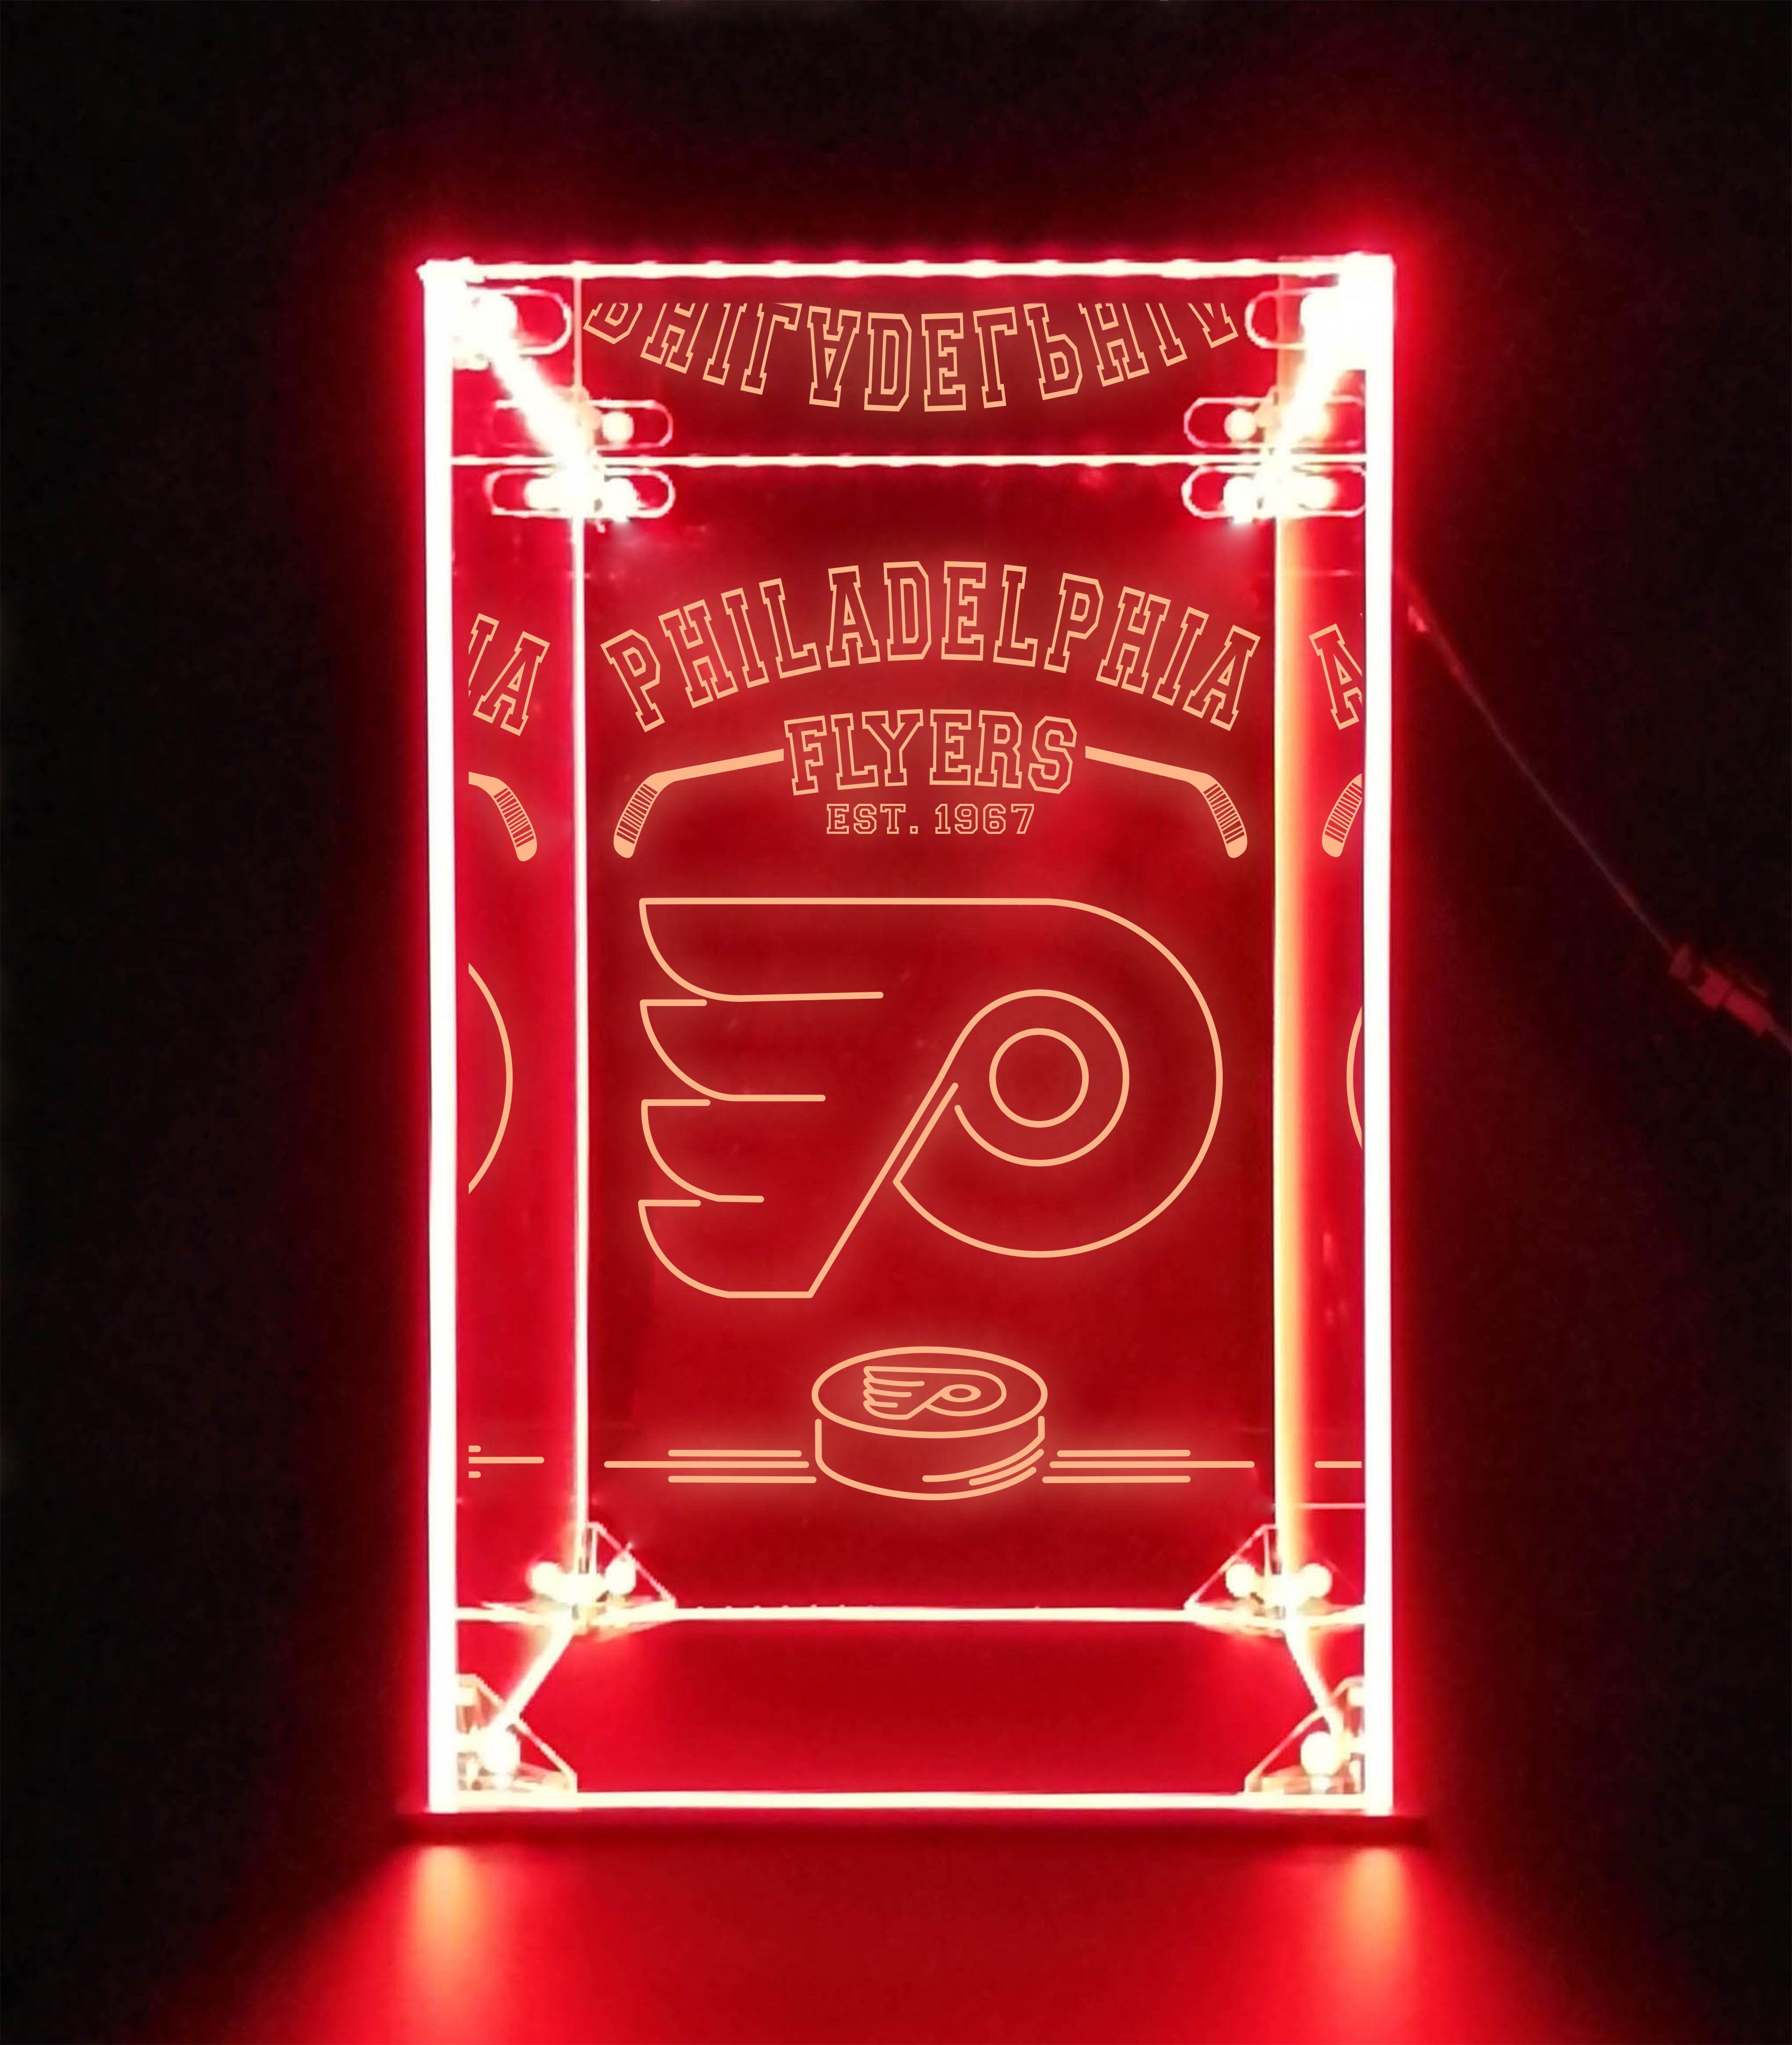 LED Display Case For Philadelphia Flyers Sports Memorabilia